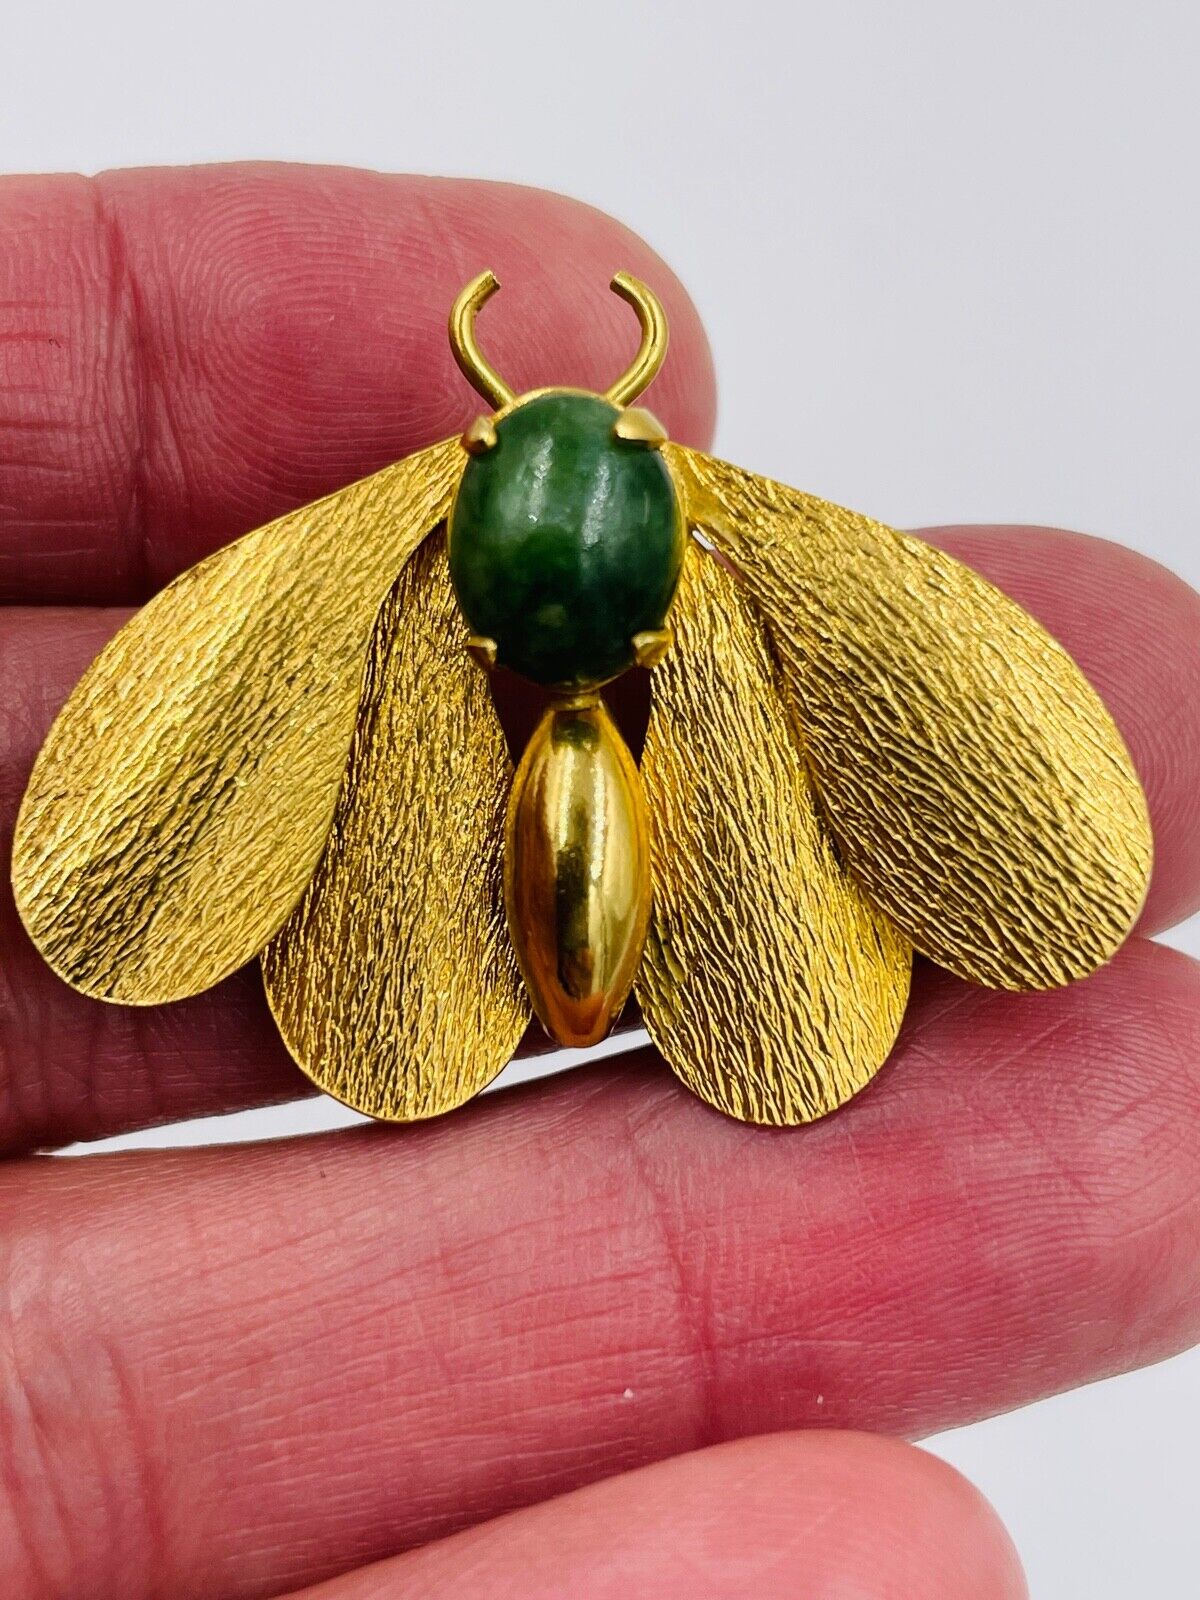 Vintage Carl Art 1/20 12k Gold Filled Connemara marble Bug Pin Brooch